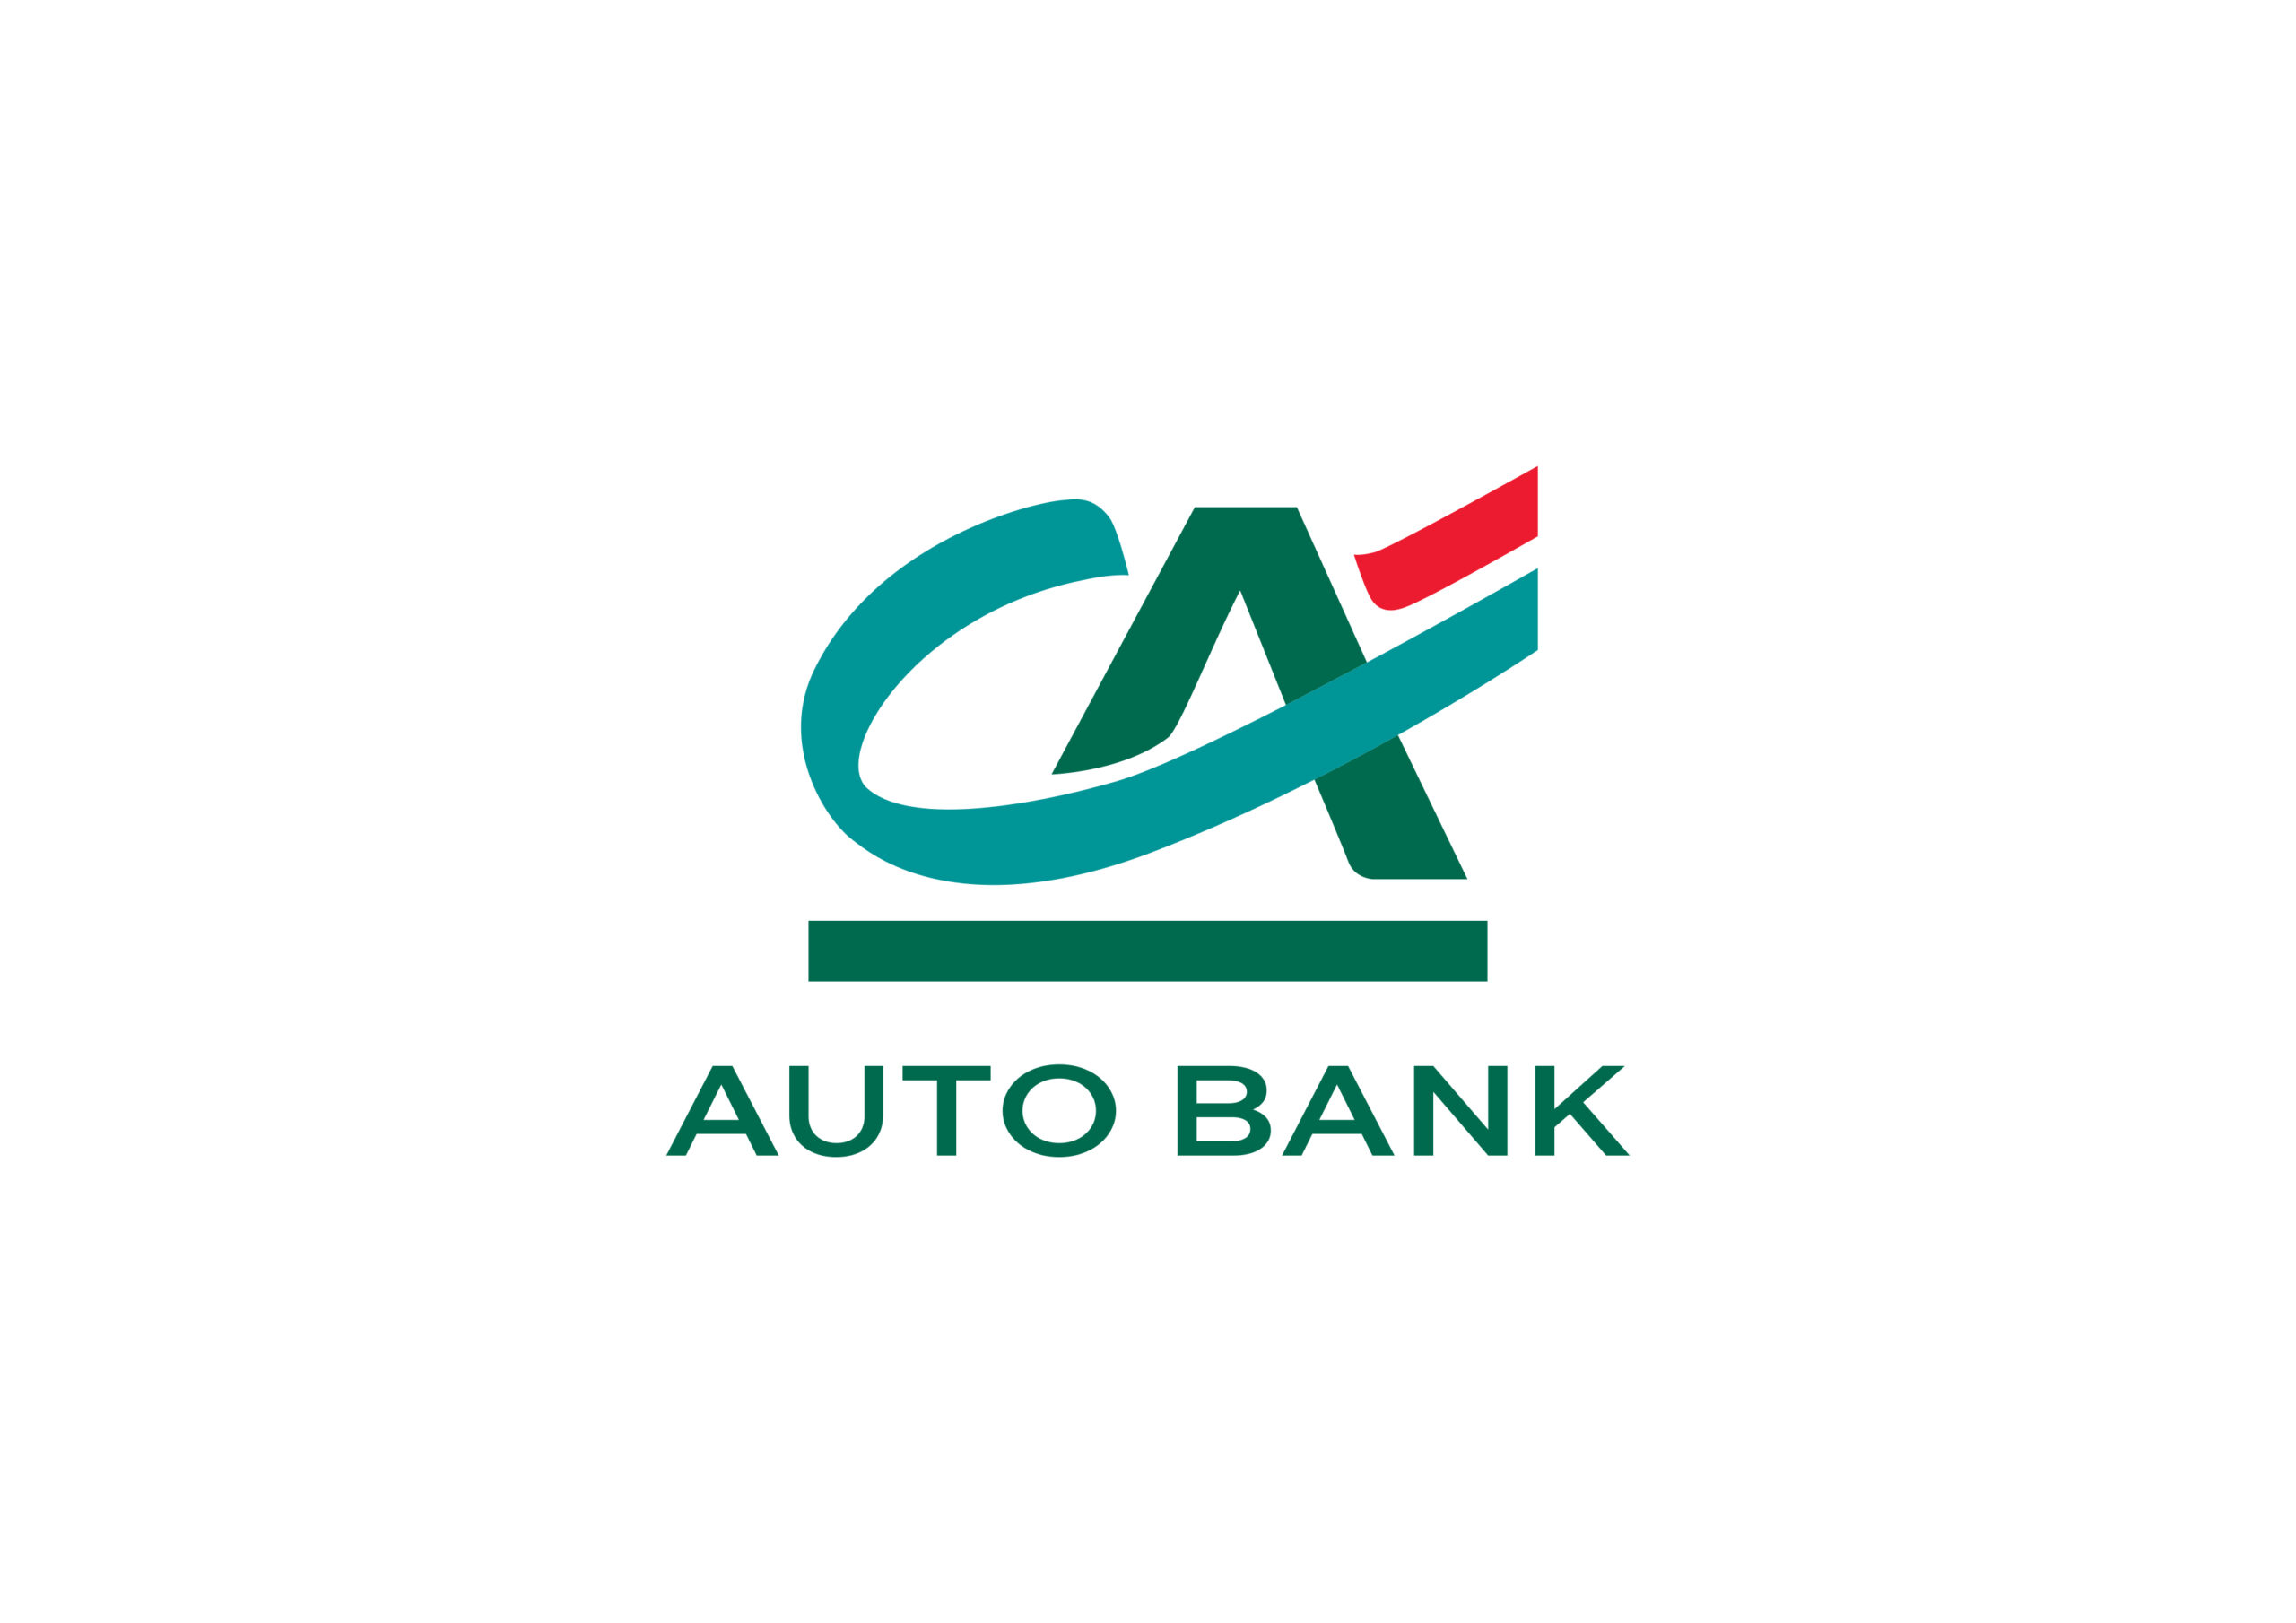 Fca Bank si evolve e cambia nome. Nasce Ca Auto Bank